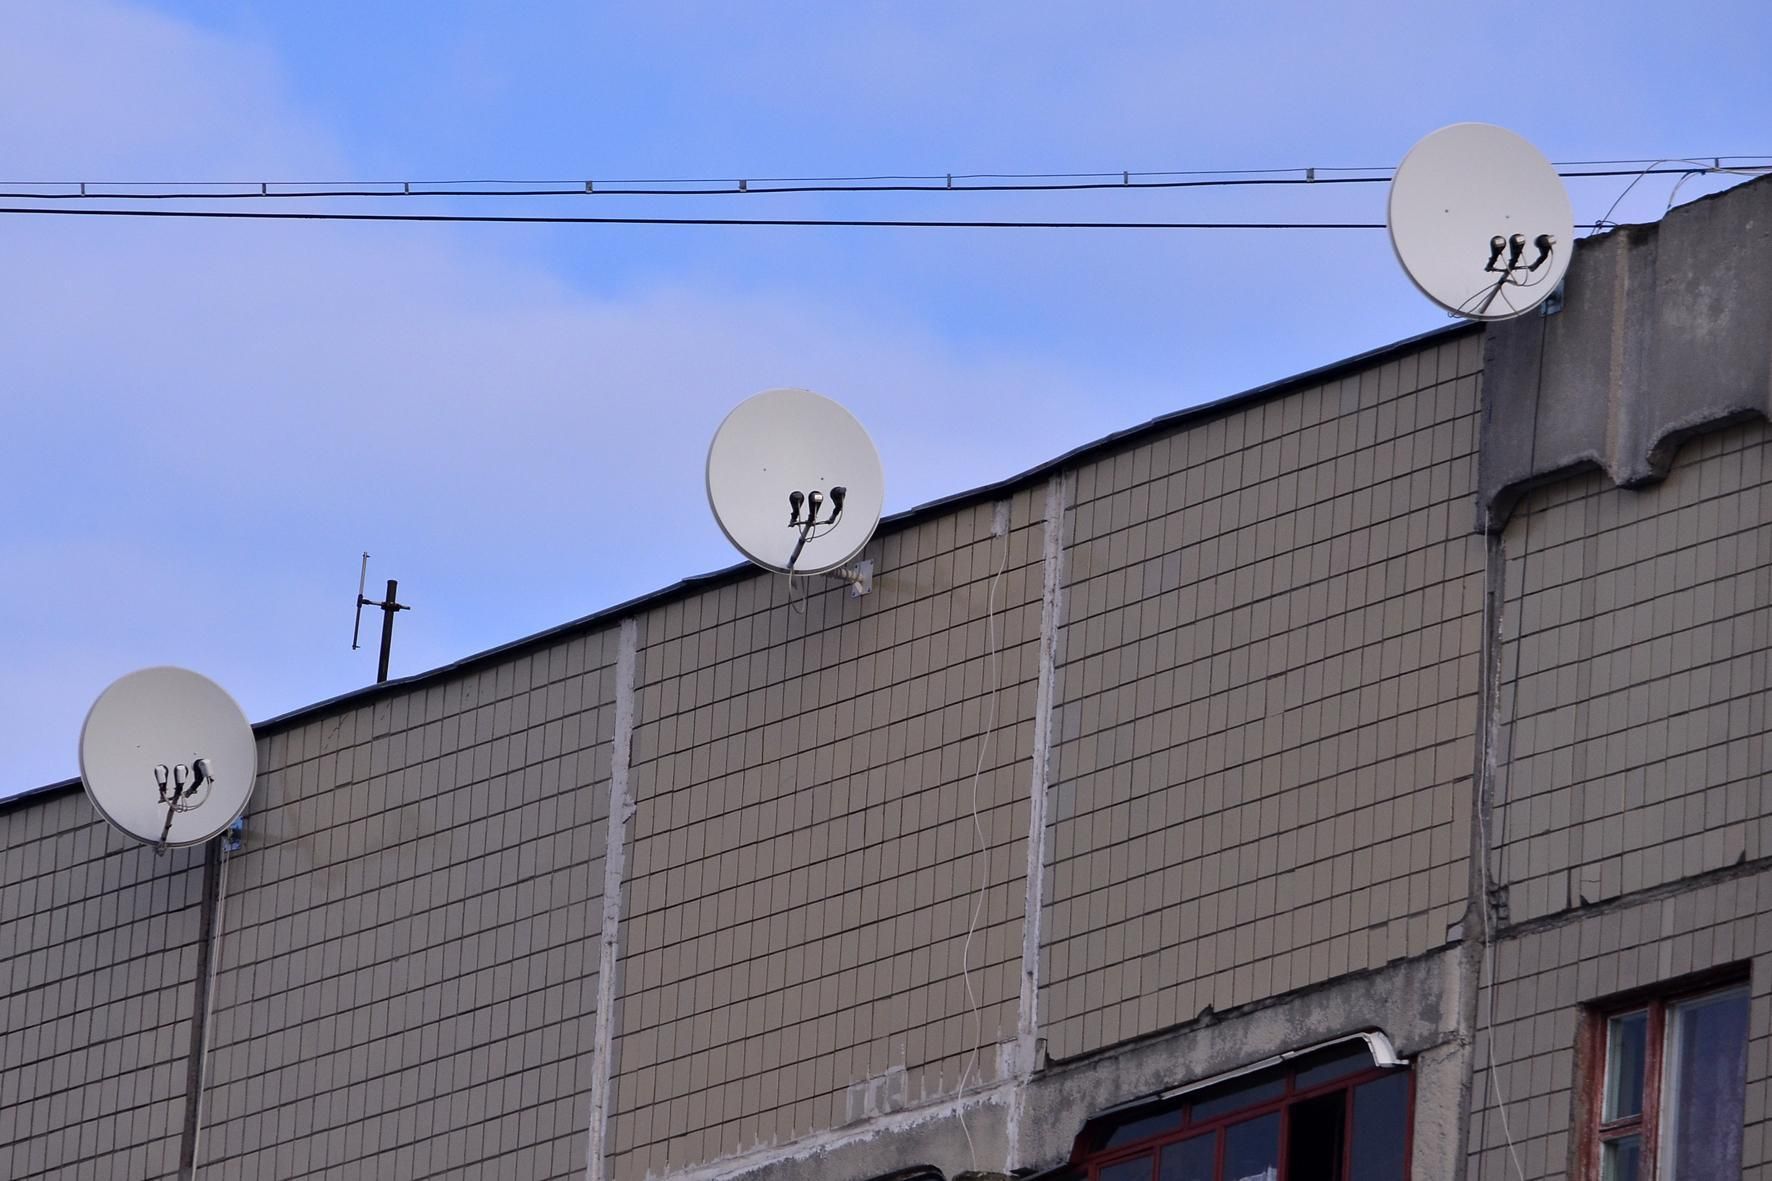 "Путін – х**ло": на даху київської висотки запримітили гучний напис - Новини Києва - Київ